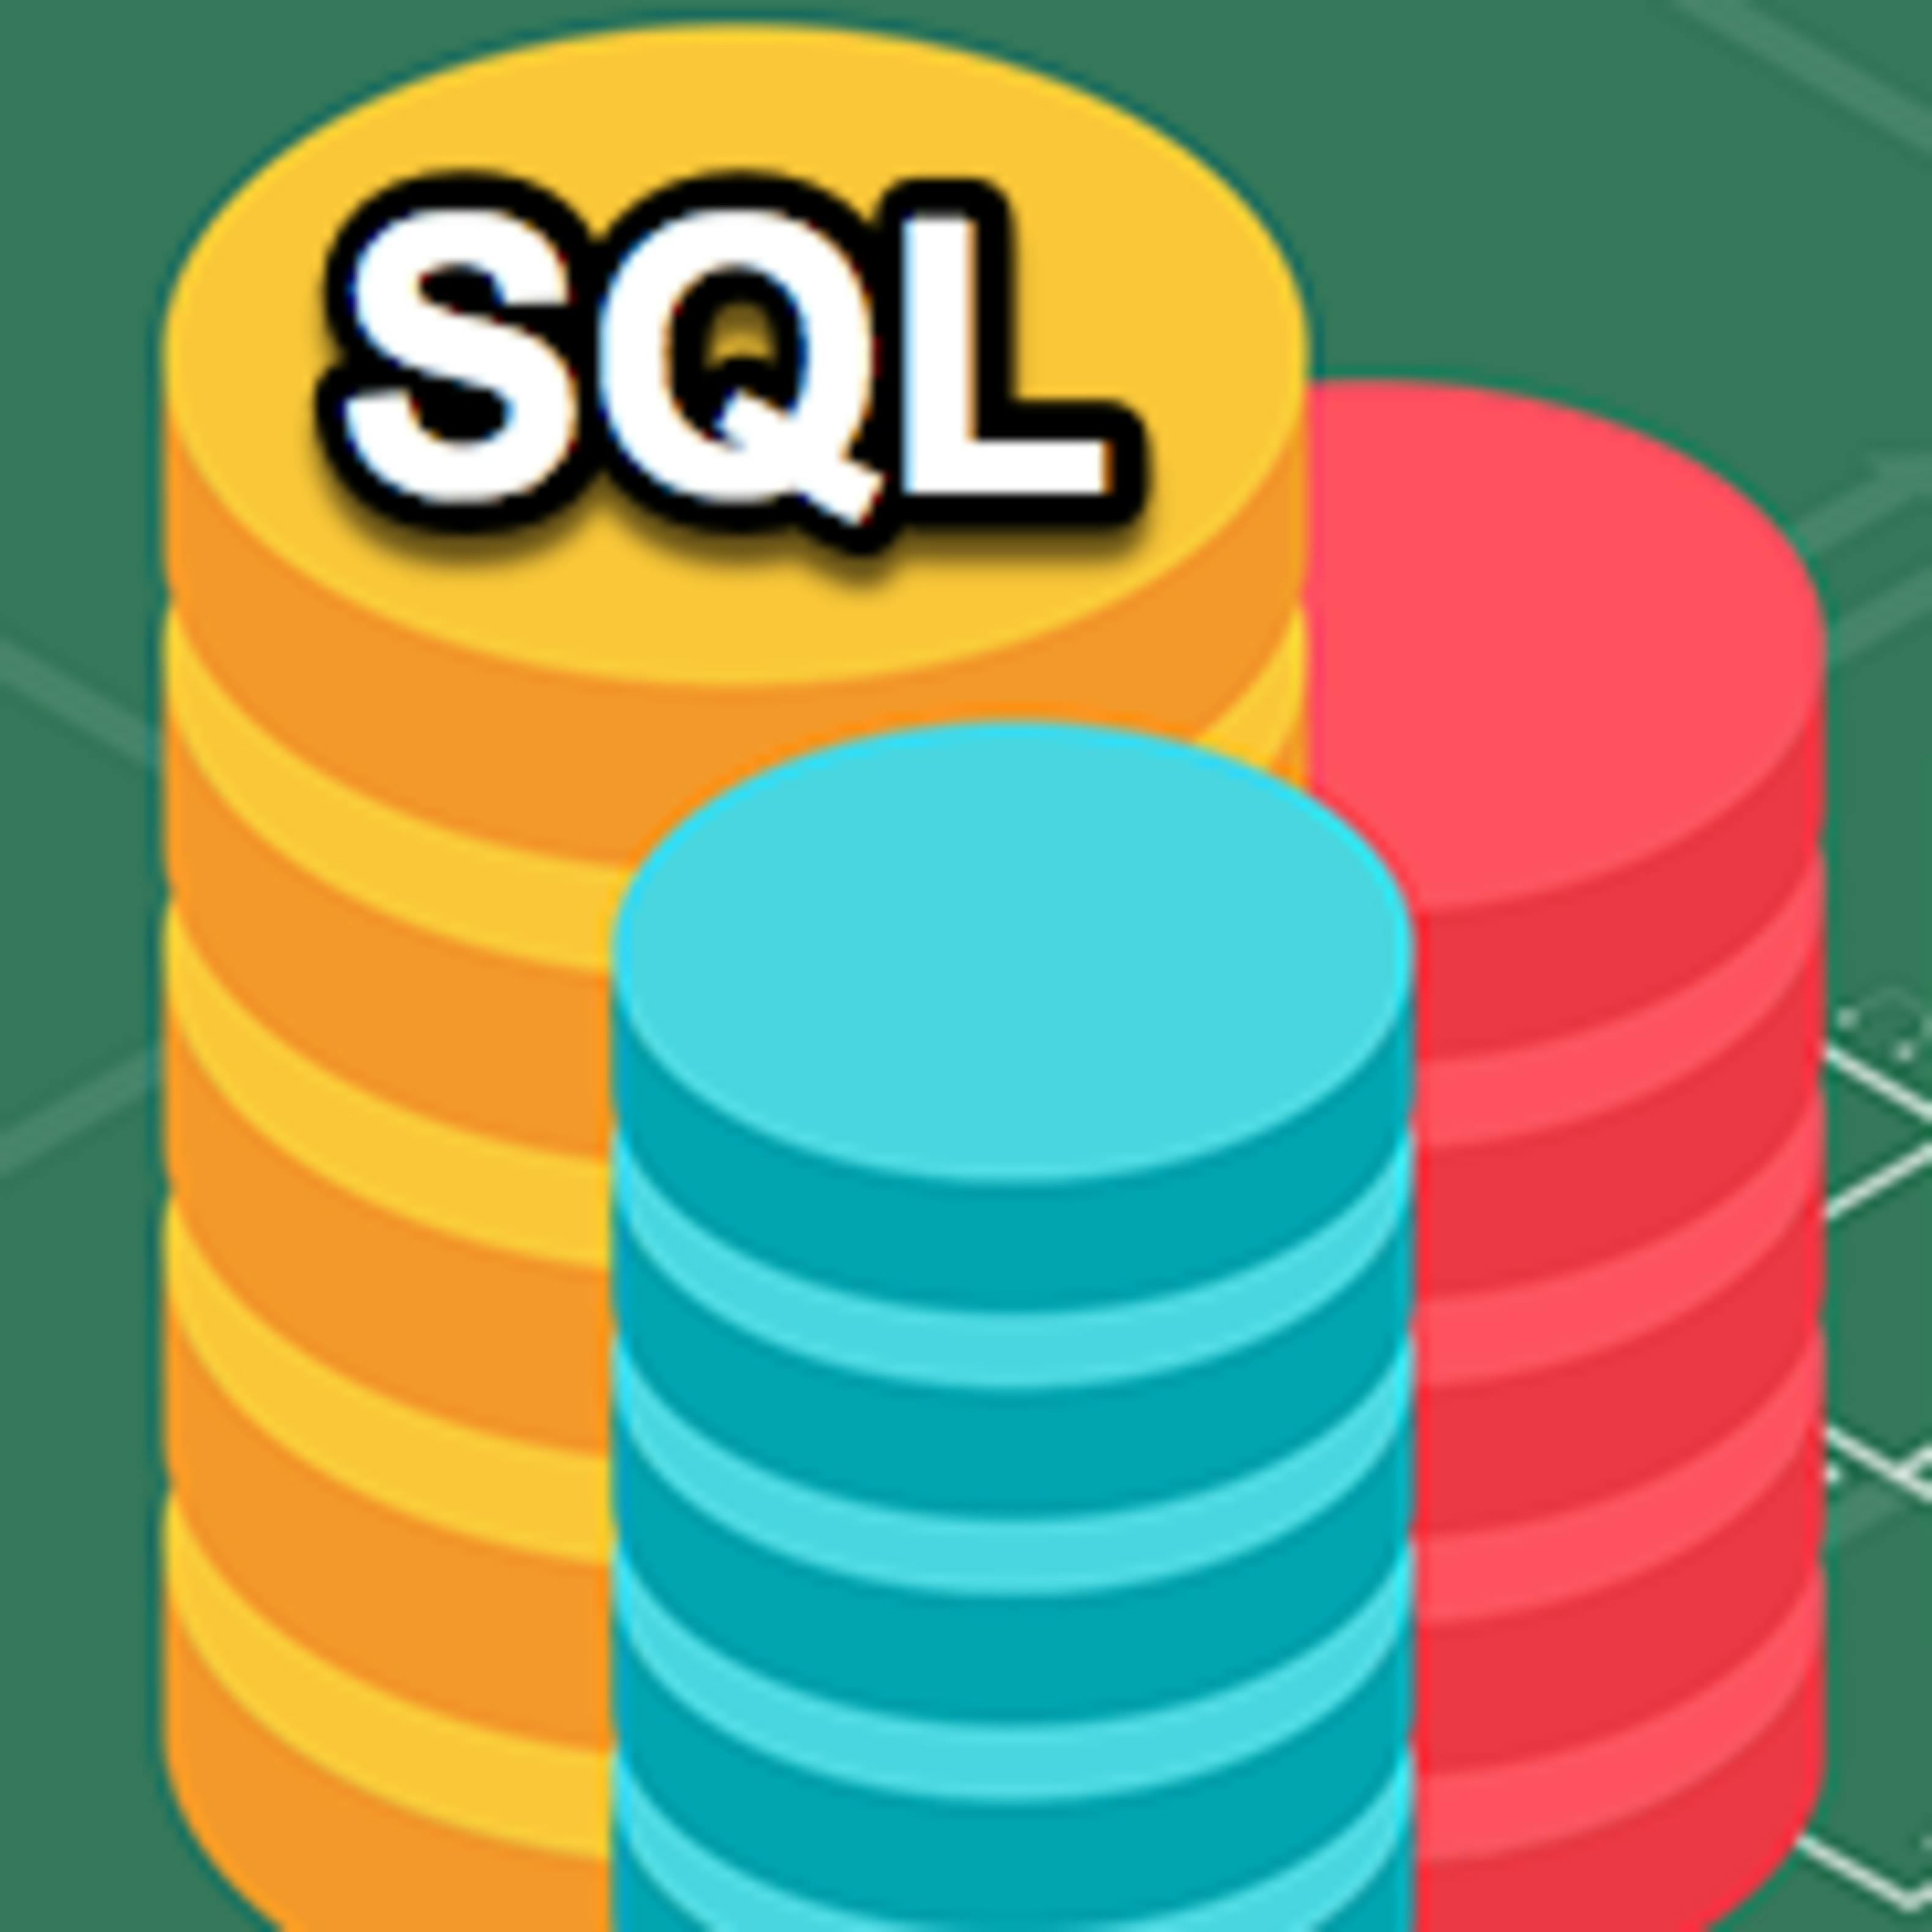 Information costs. SQL. Year SQL. SQL PRIMEKEY.